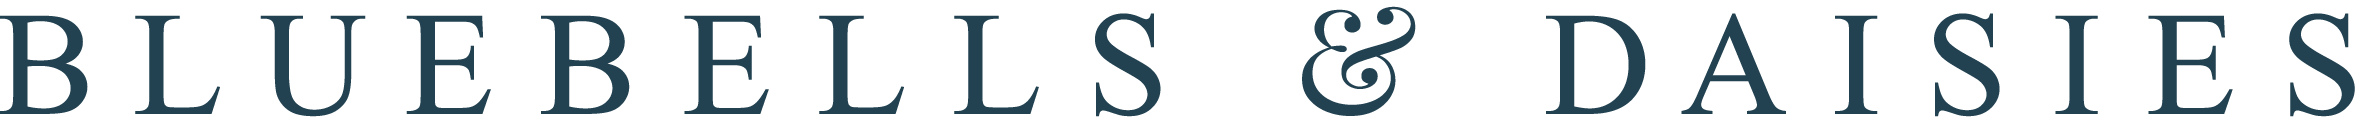 Bluebells & Daisies Logo